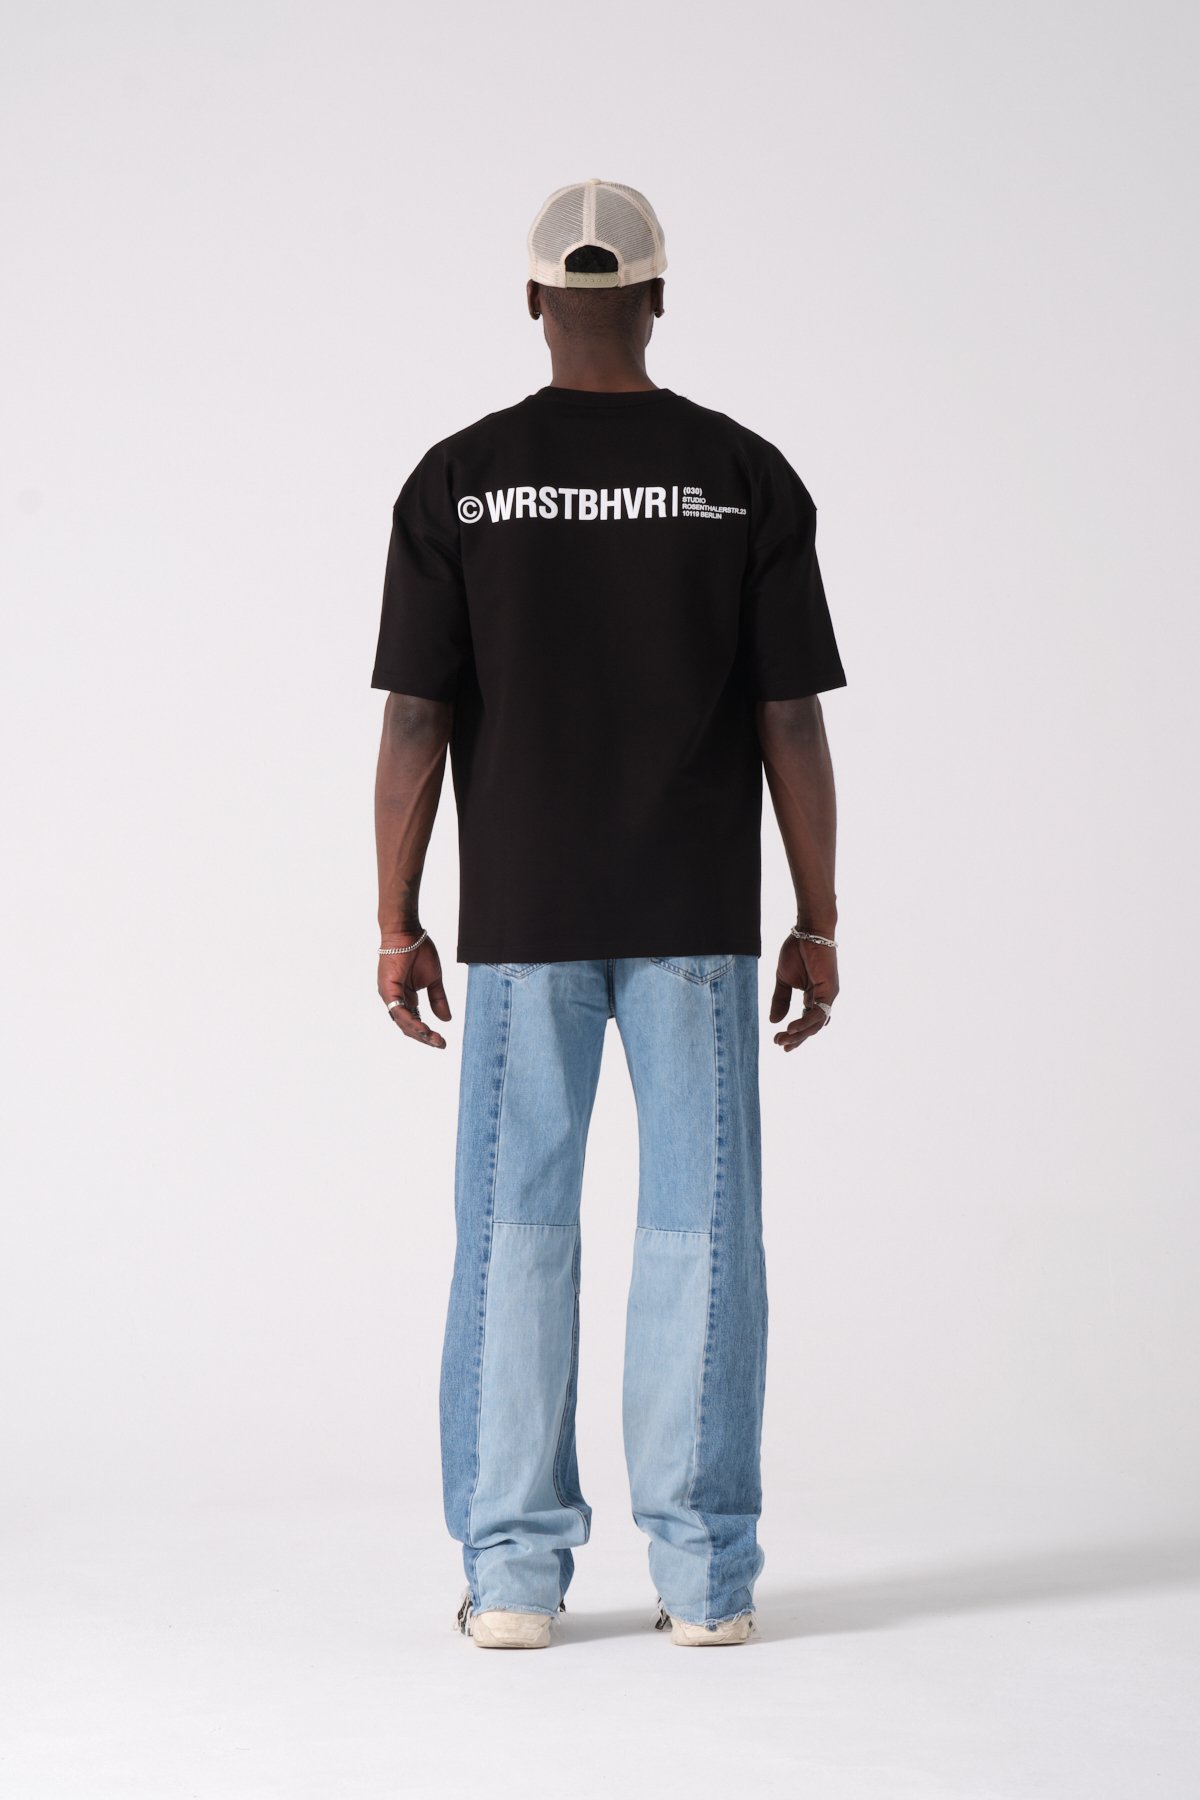 WRSTBHVRI Baskılı Oversize T-shirt - Siyah